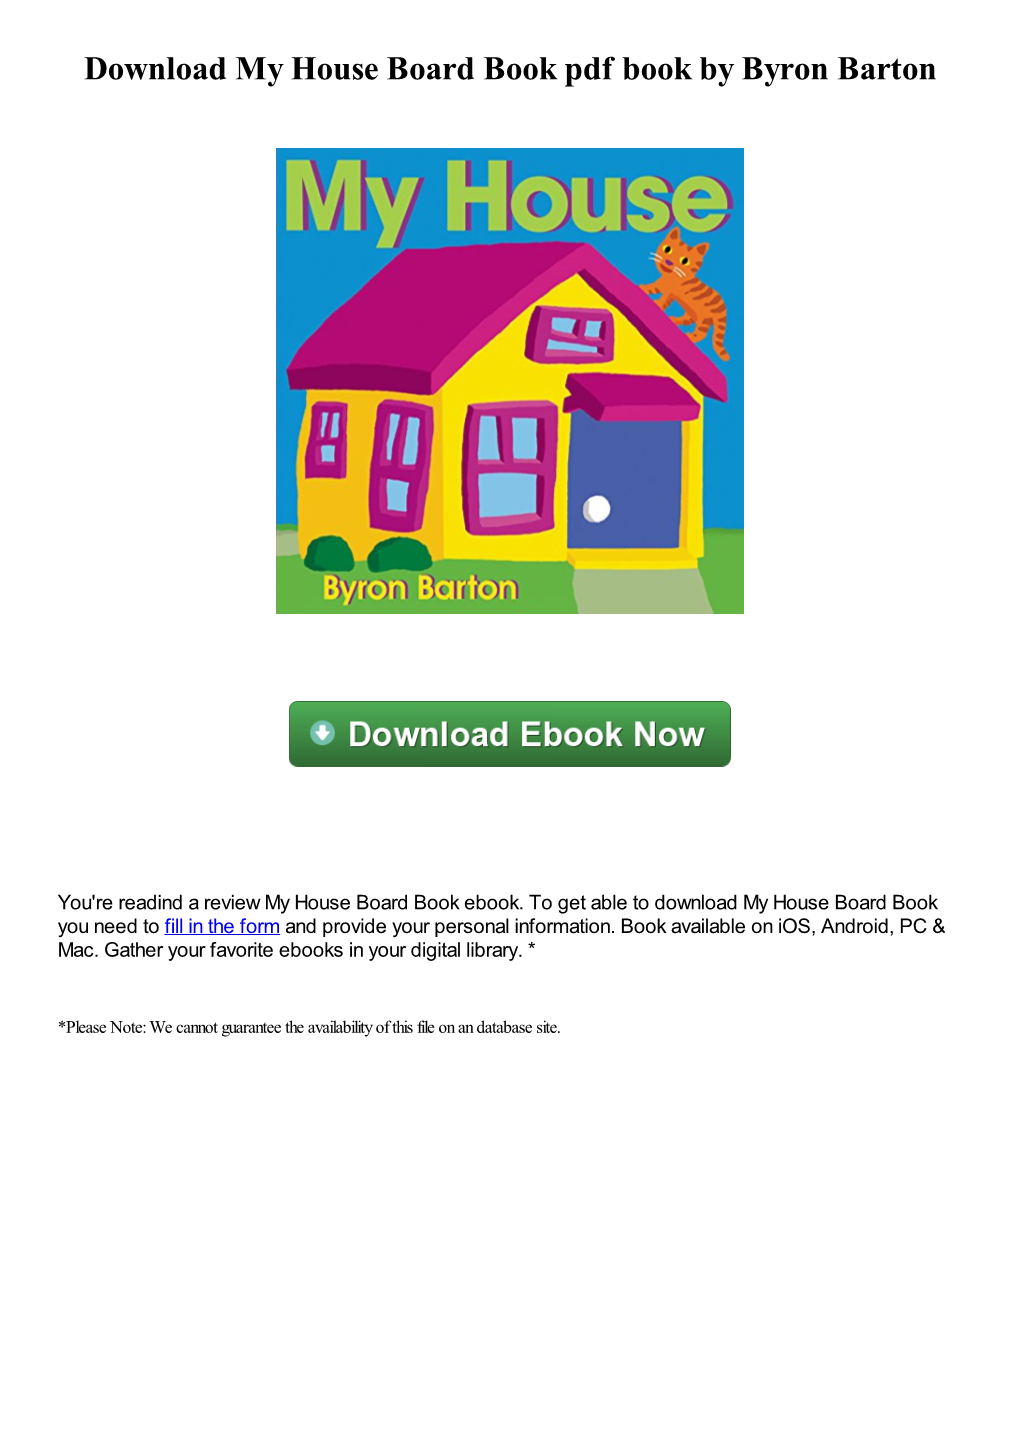 Download My House Board Book Pdf Ebook by Byron Barton